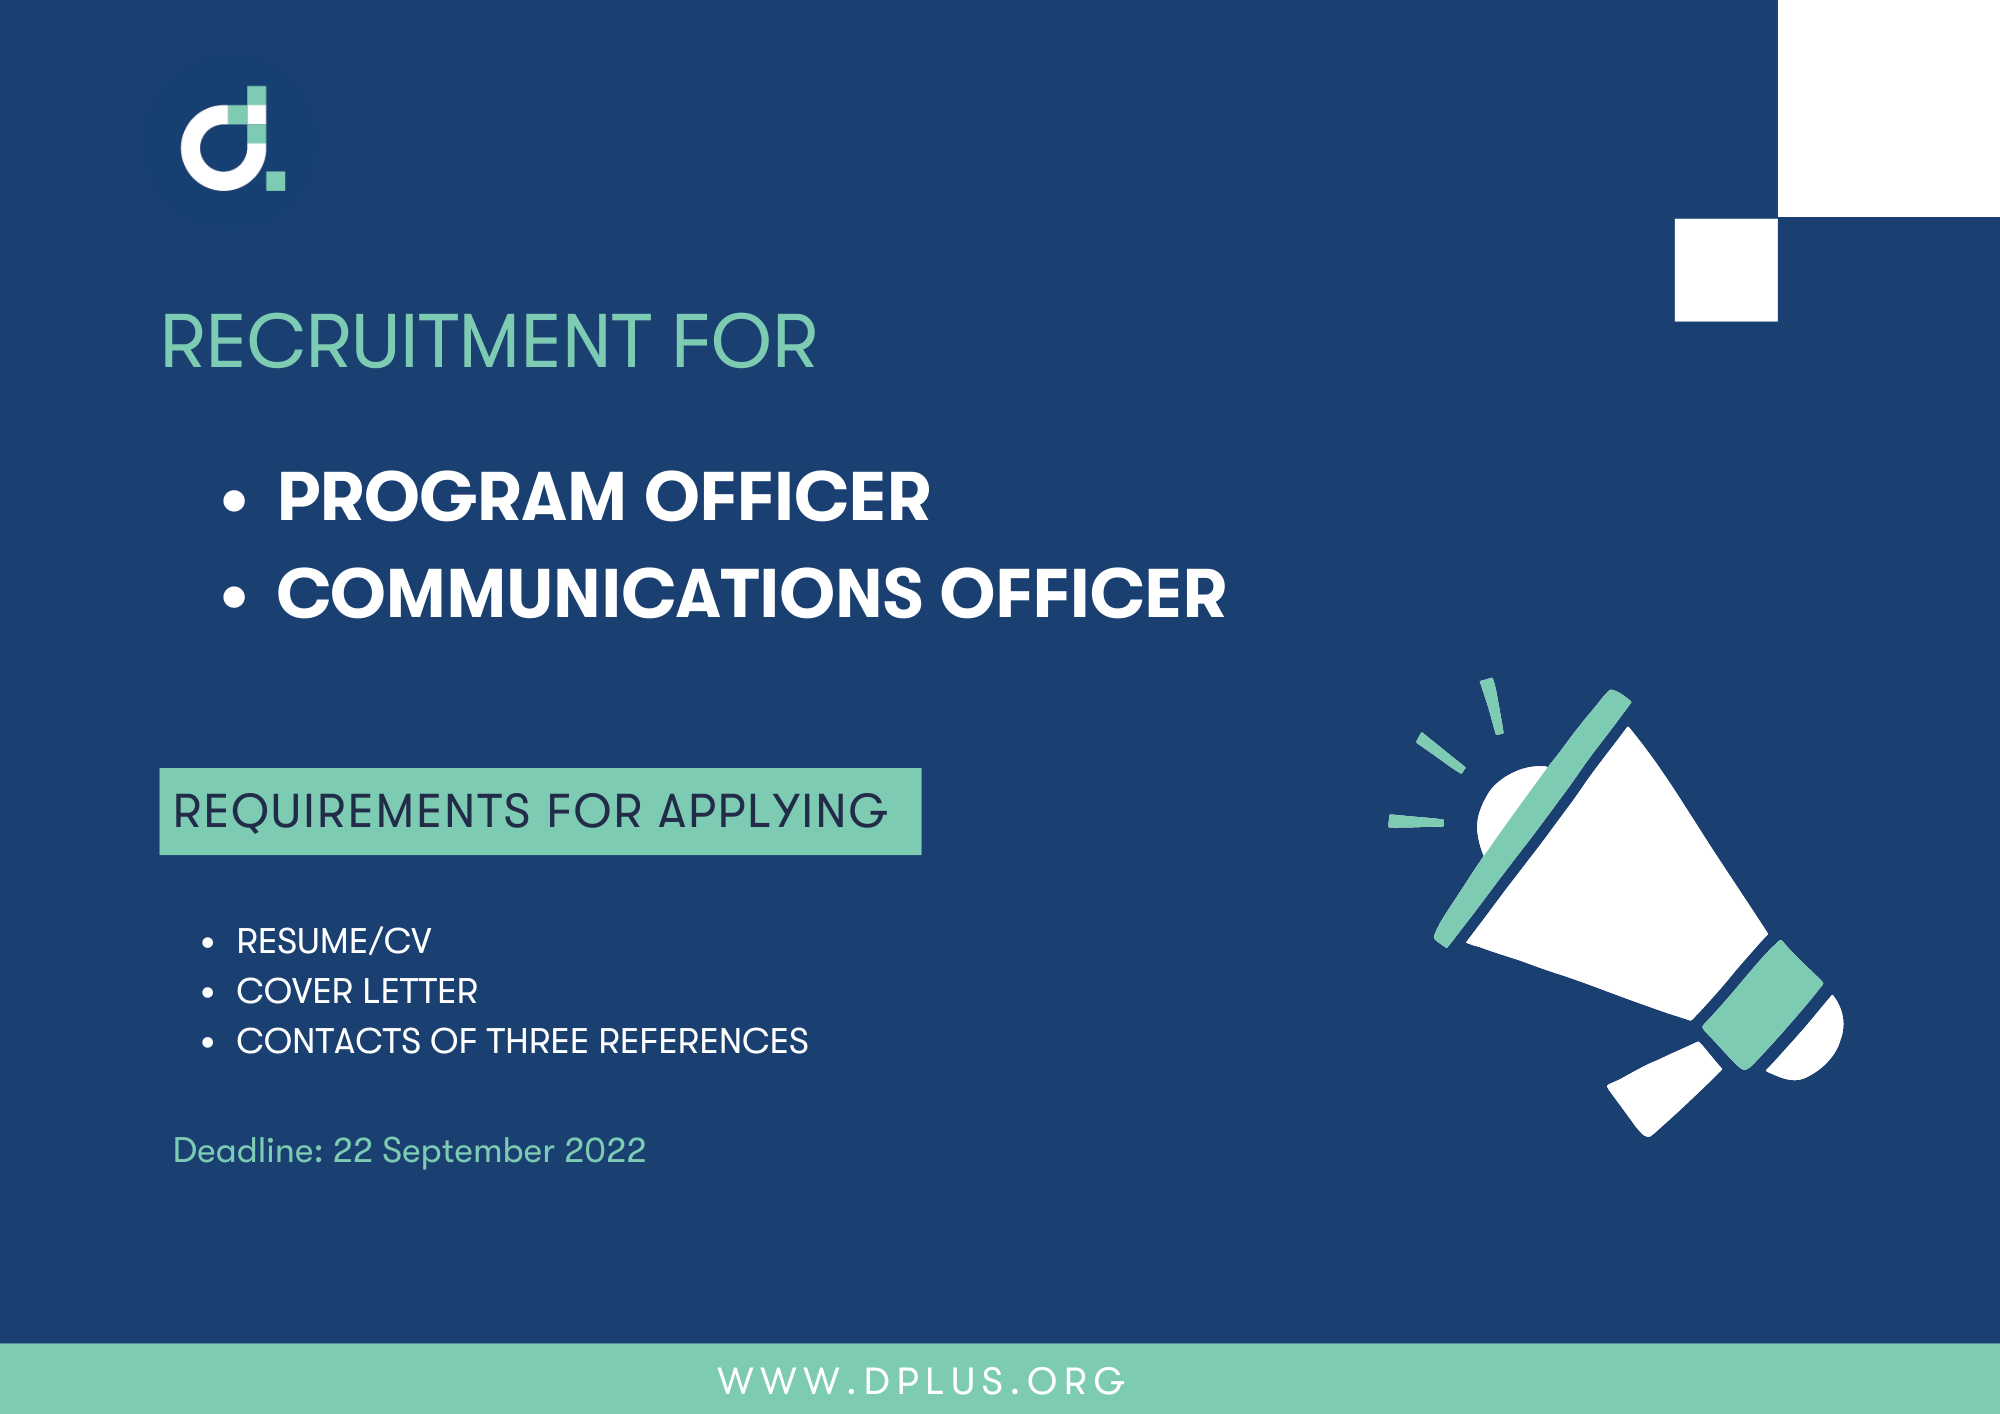 Recruitment for Program Officer and Communications Officer